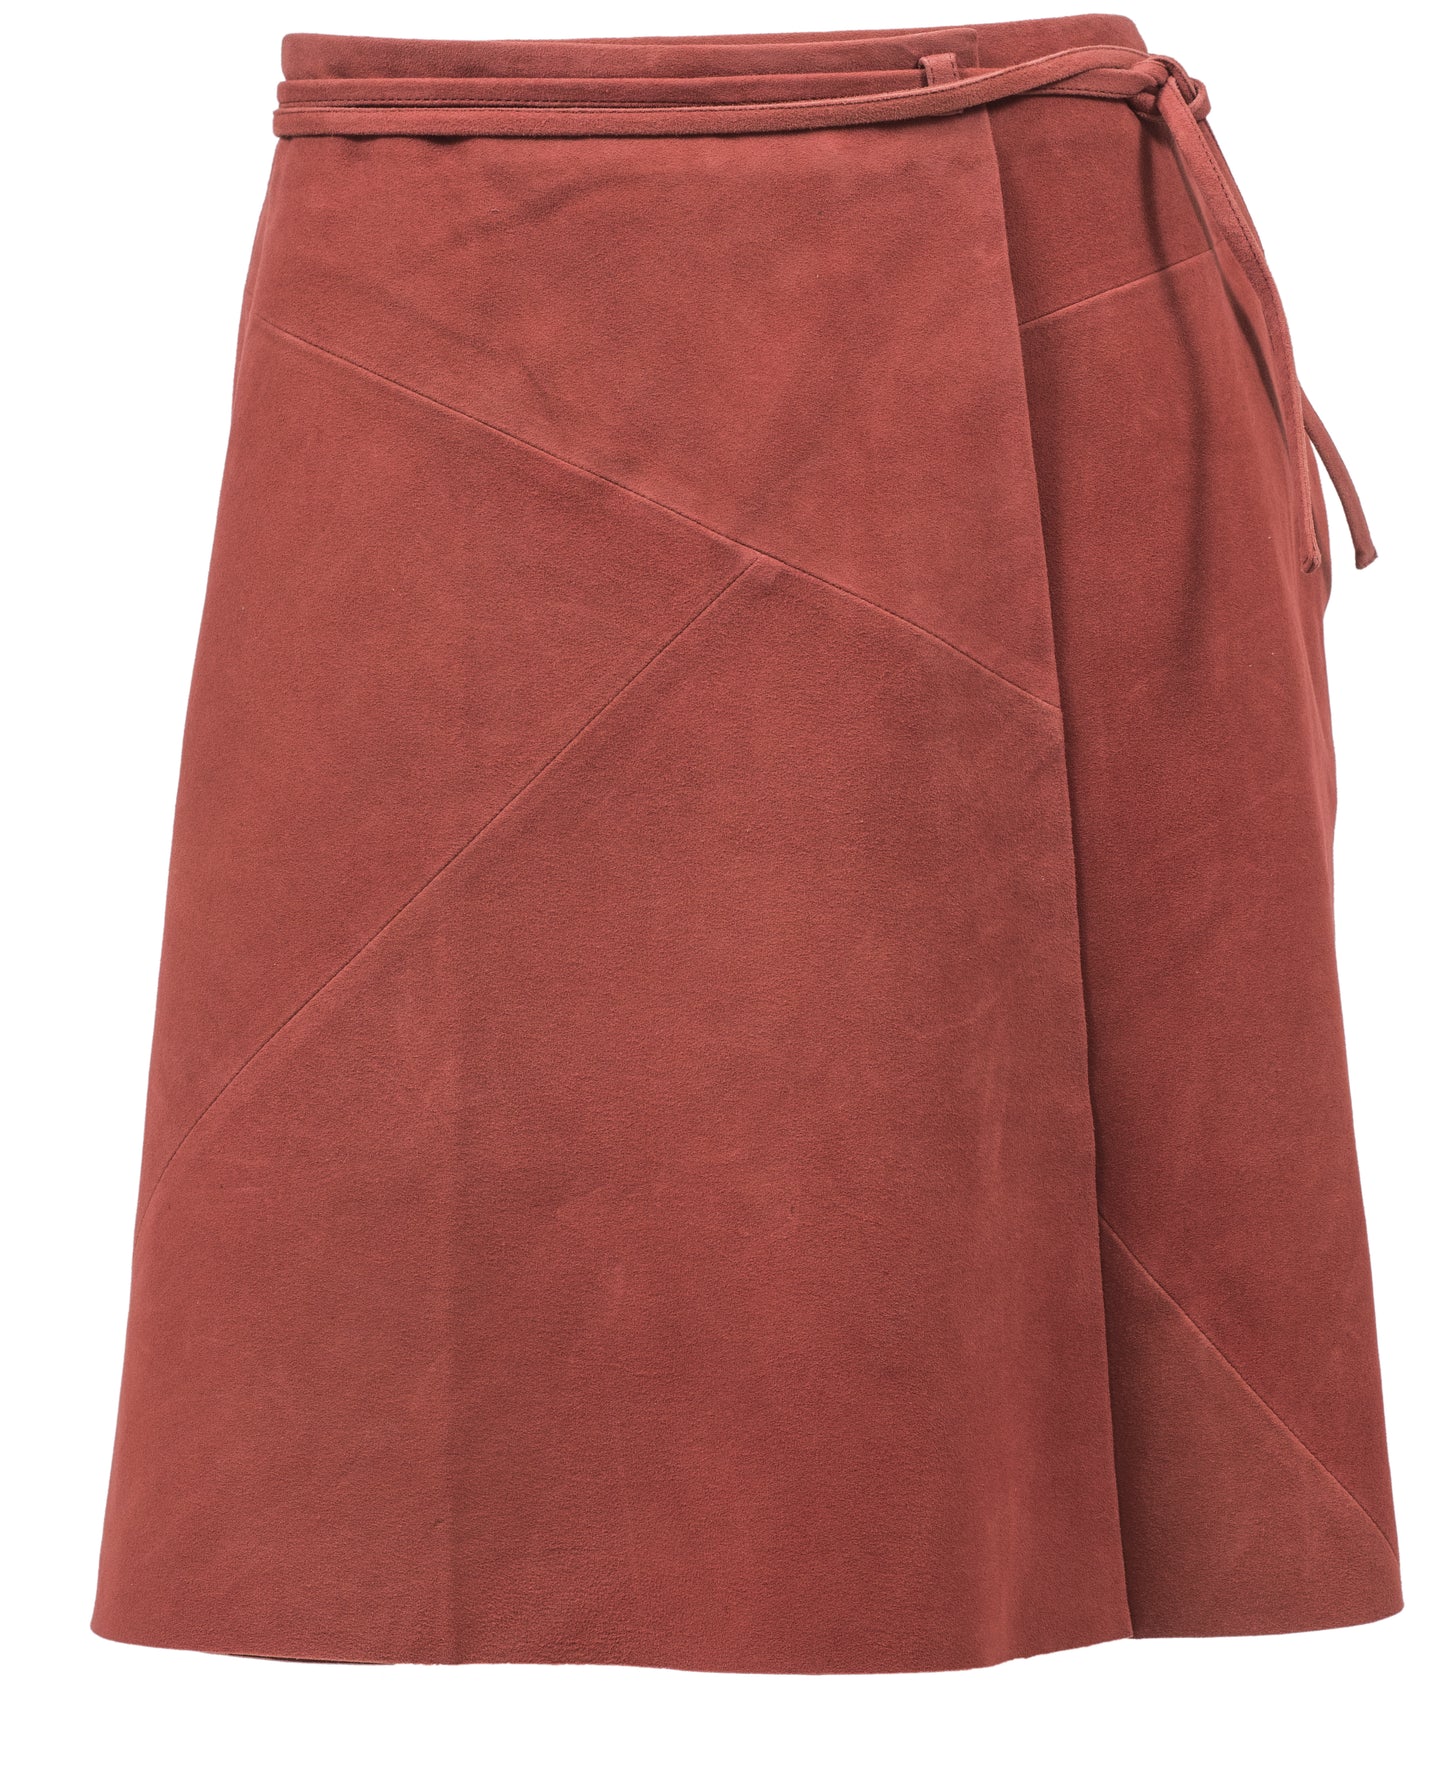 Louise - wrap skirt